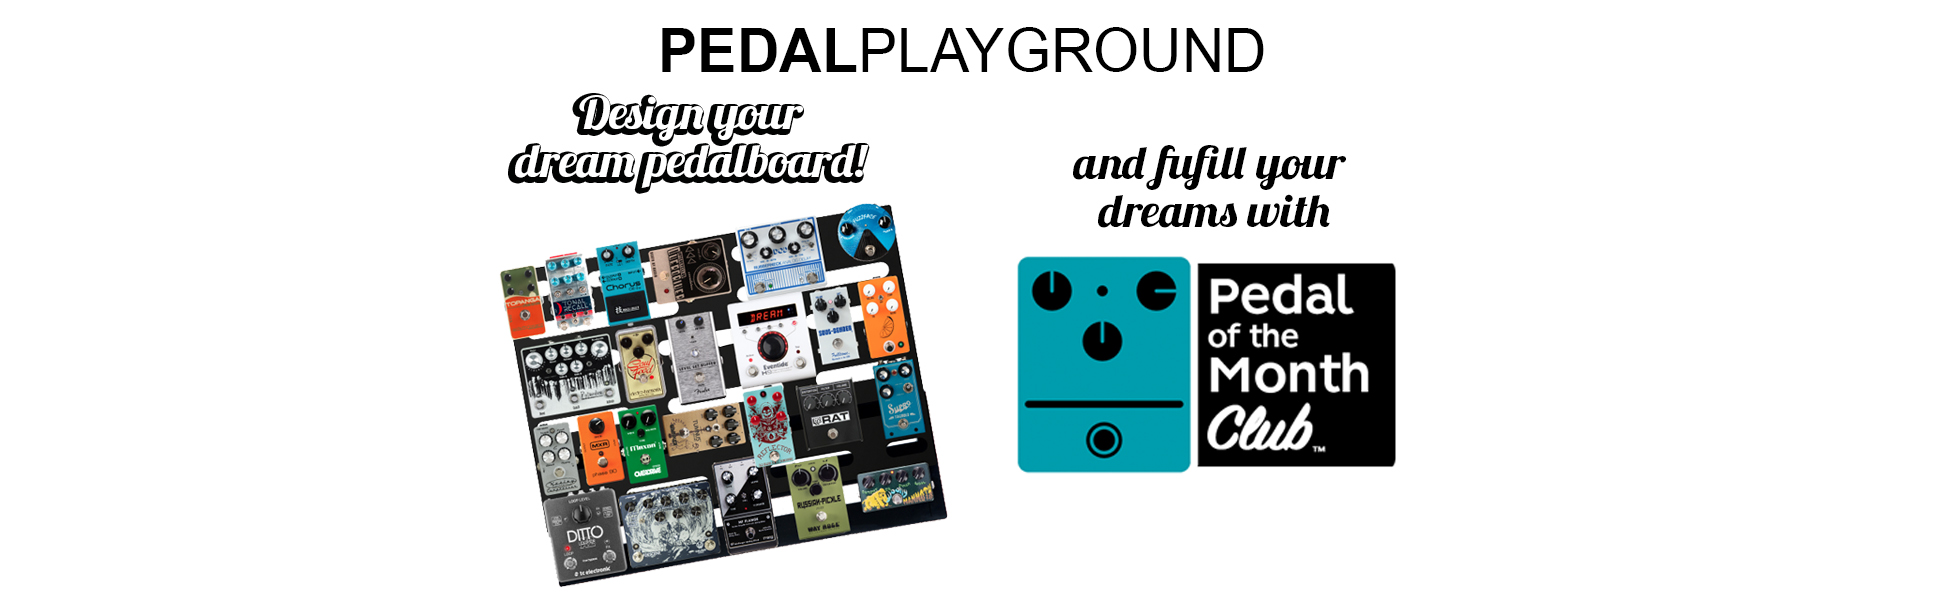 Pedal Playground Blog Header